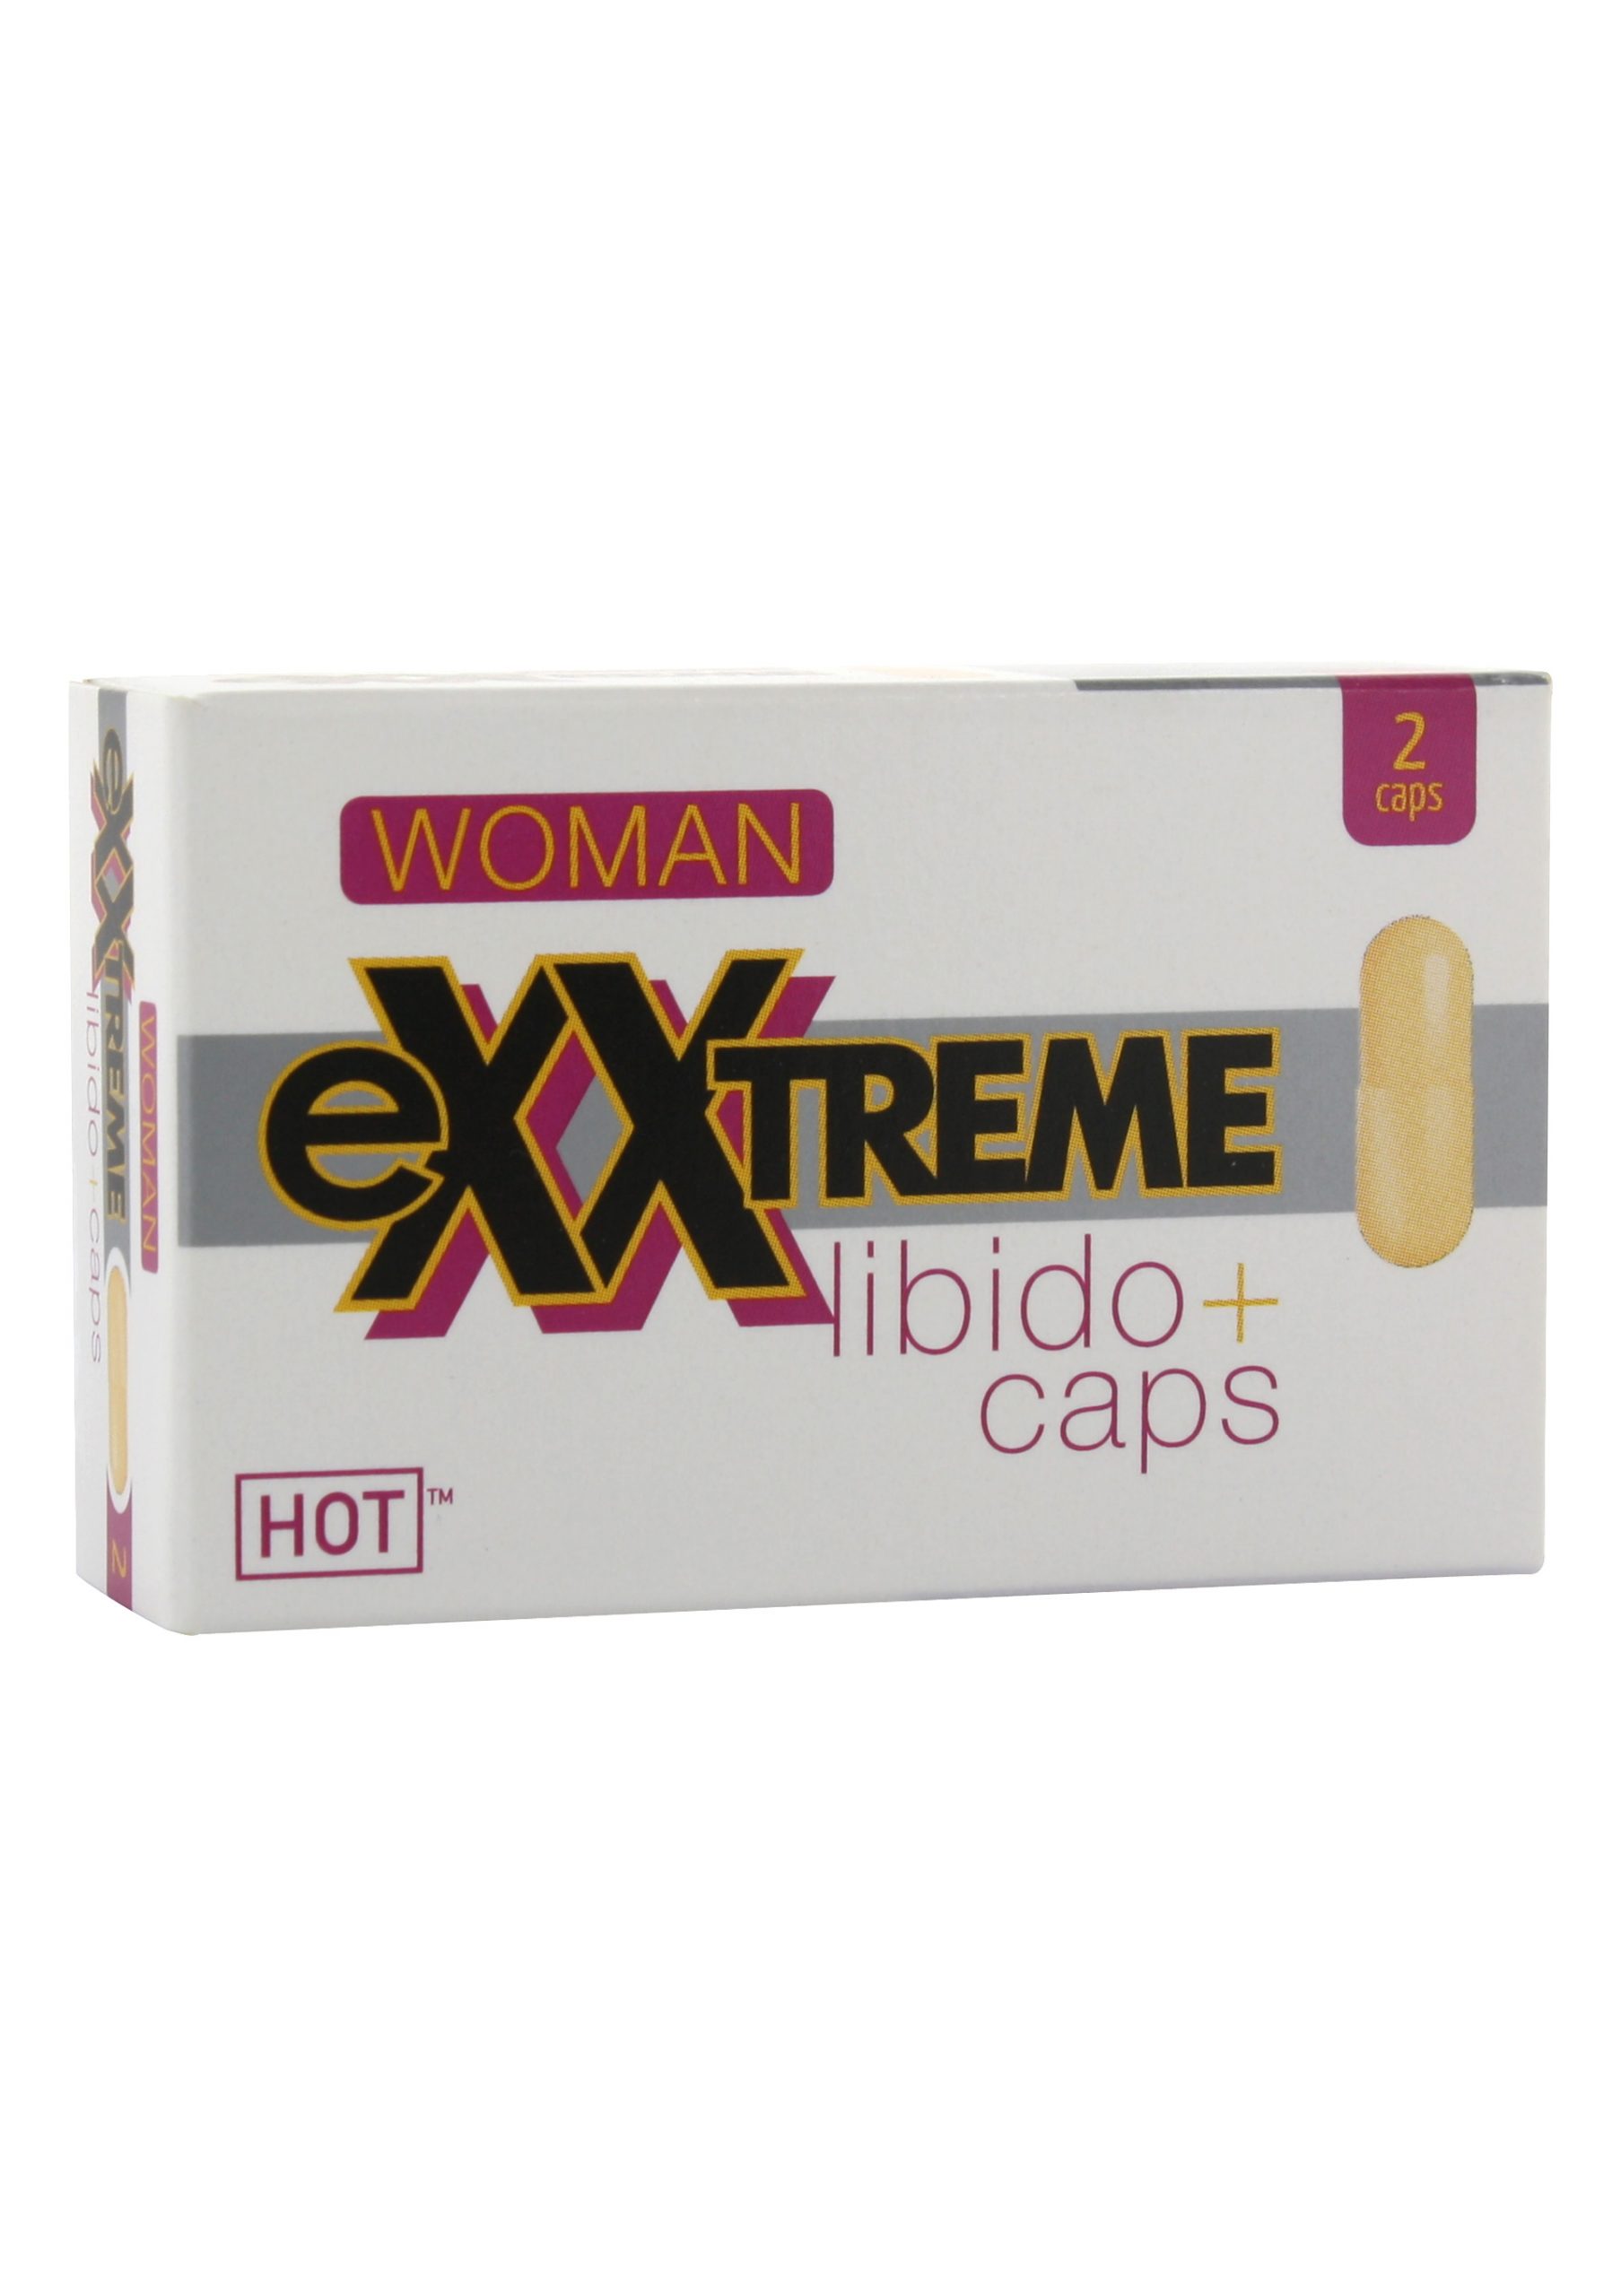 Image of Exxtreme Libido+ Woman 2 stuks 